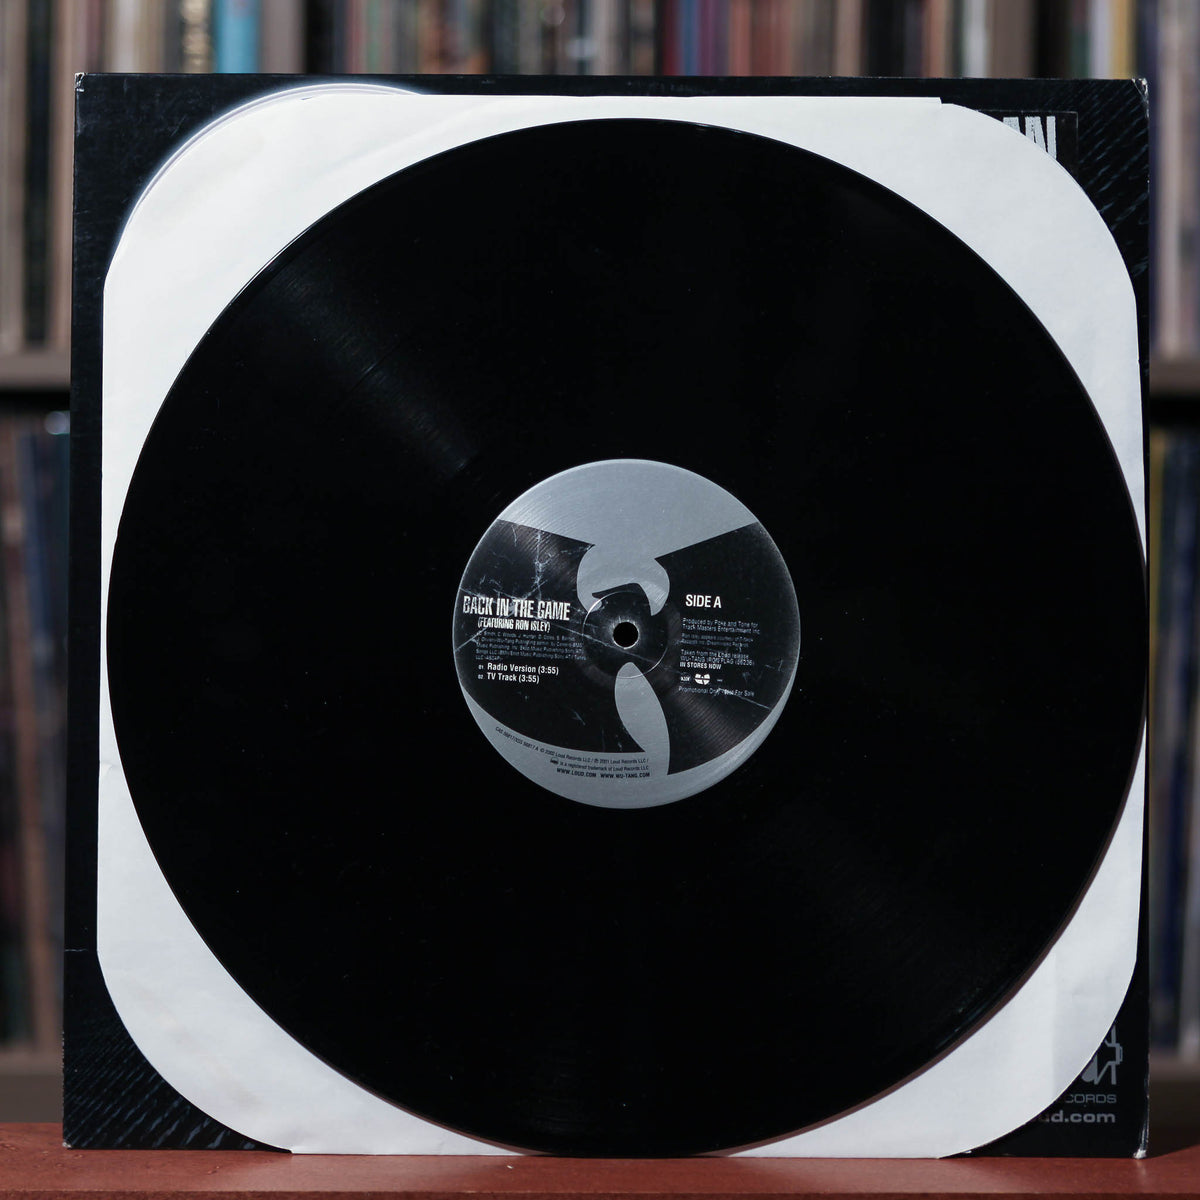 (2x) Wu-Tang Clan – Back In The Game - 12 Vinyl Single Promo